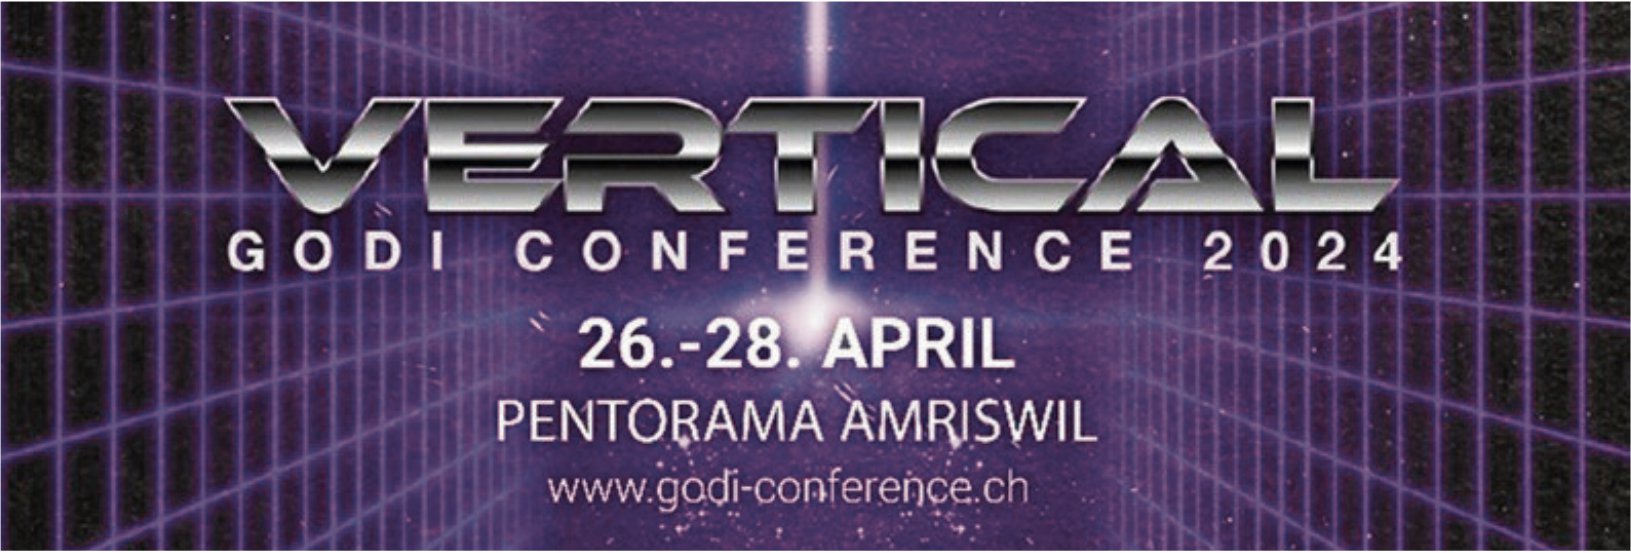 Vertical Godi Conference, 26. April, Pentorama Amriswil